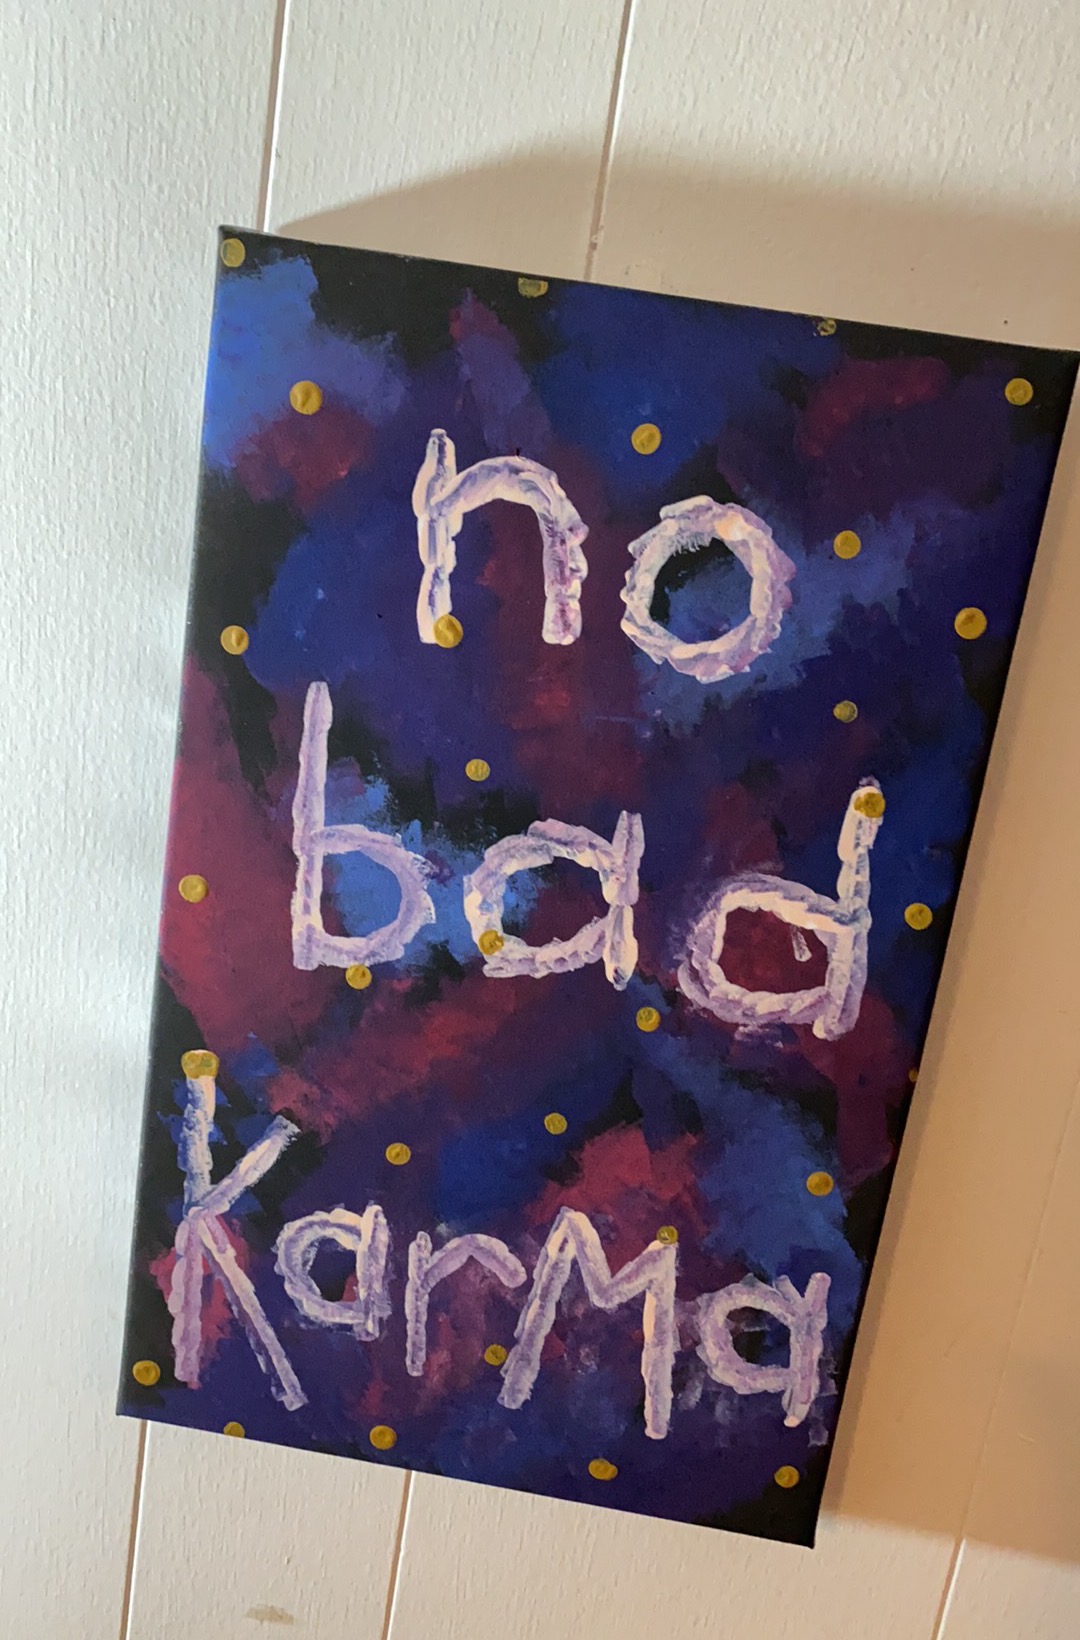 no bad karma